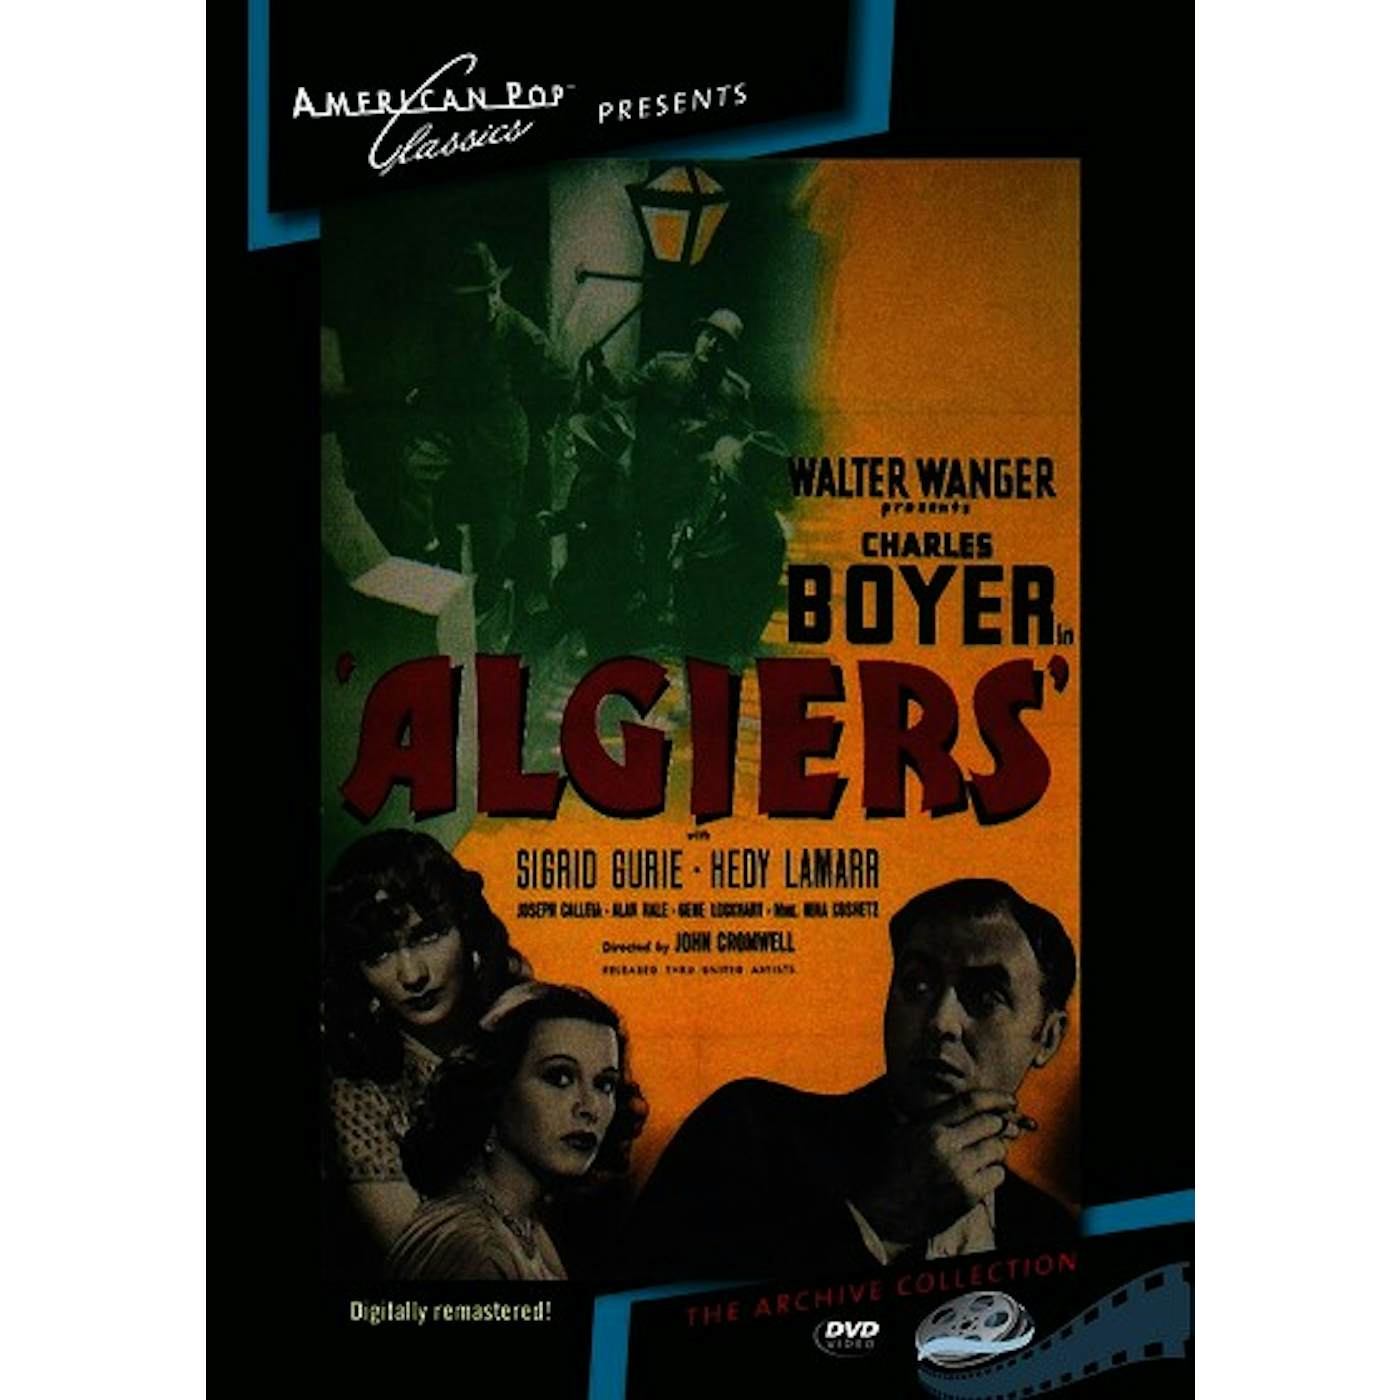 ALGIERS DVD